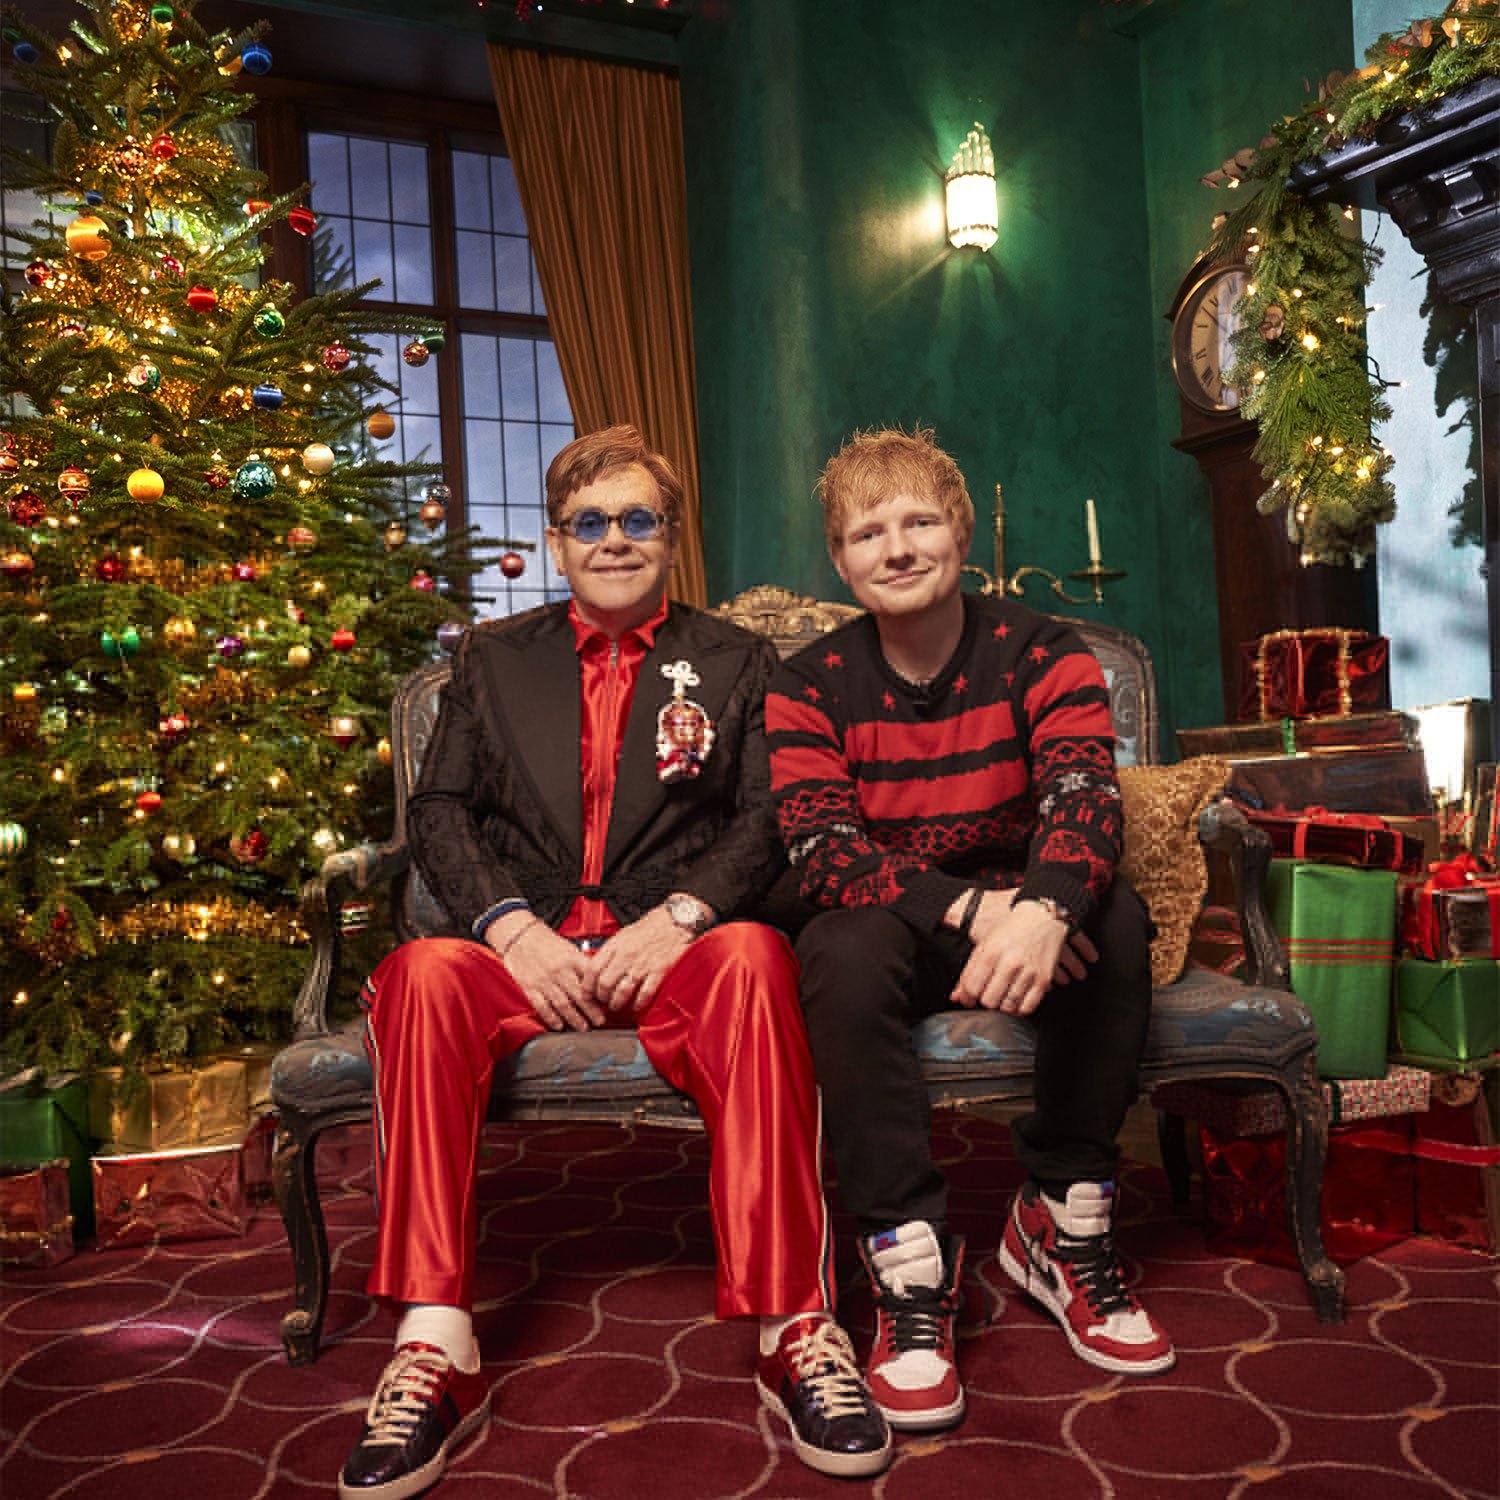 Ed Sheeran, Elton John drop new Holiday MV ‘Merry Christmas’